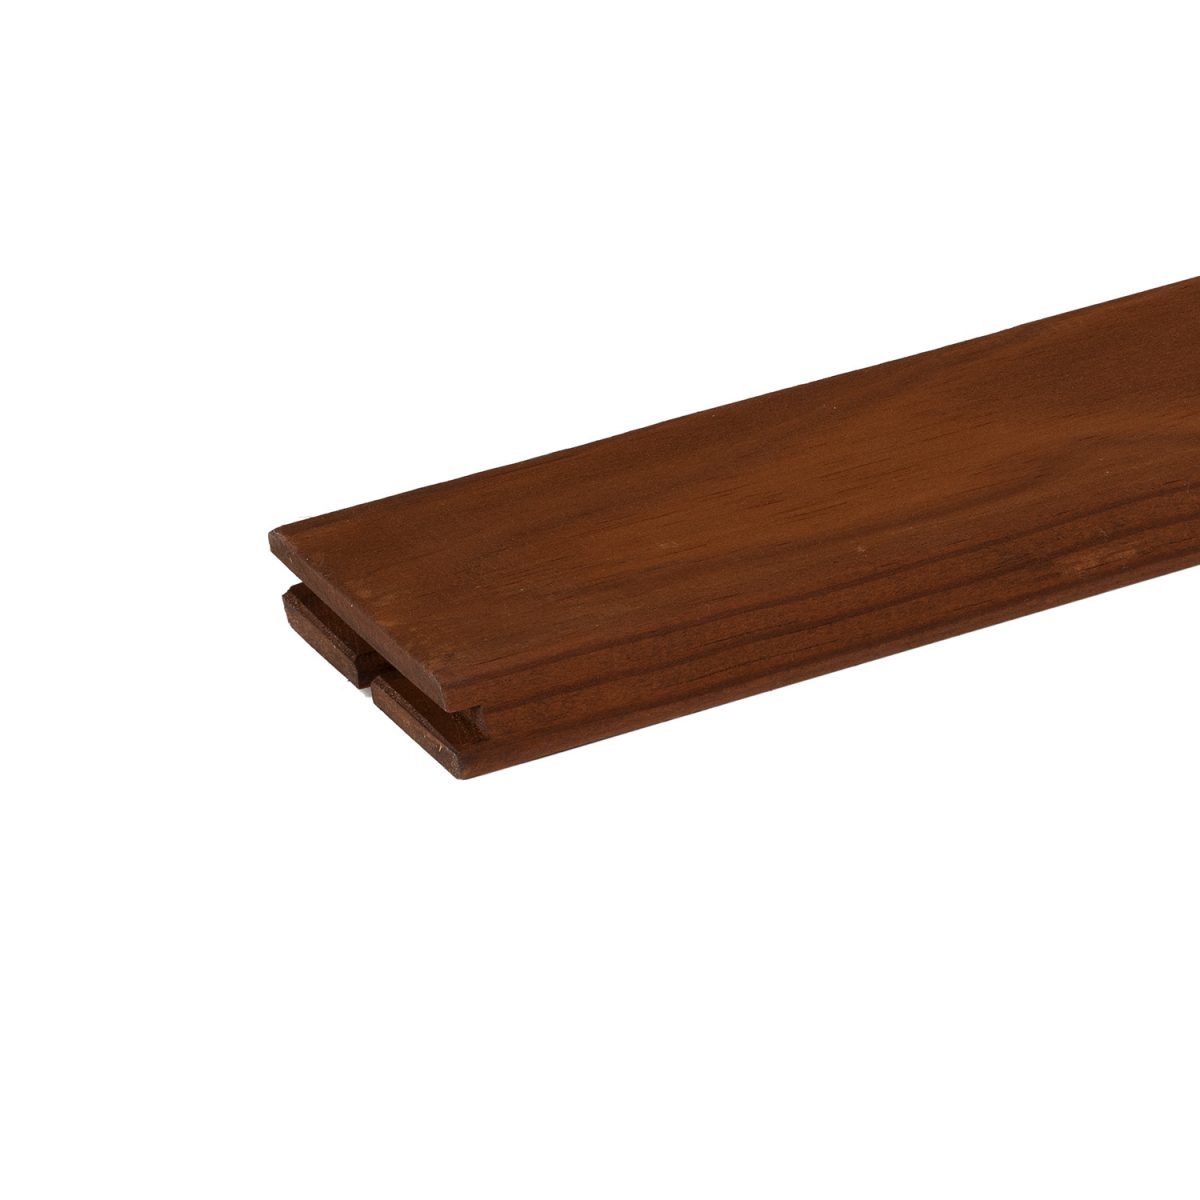 perfil de madera termotratada combi clip con lasur color teka